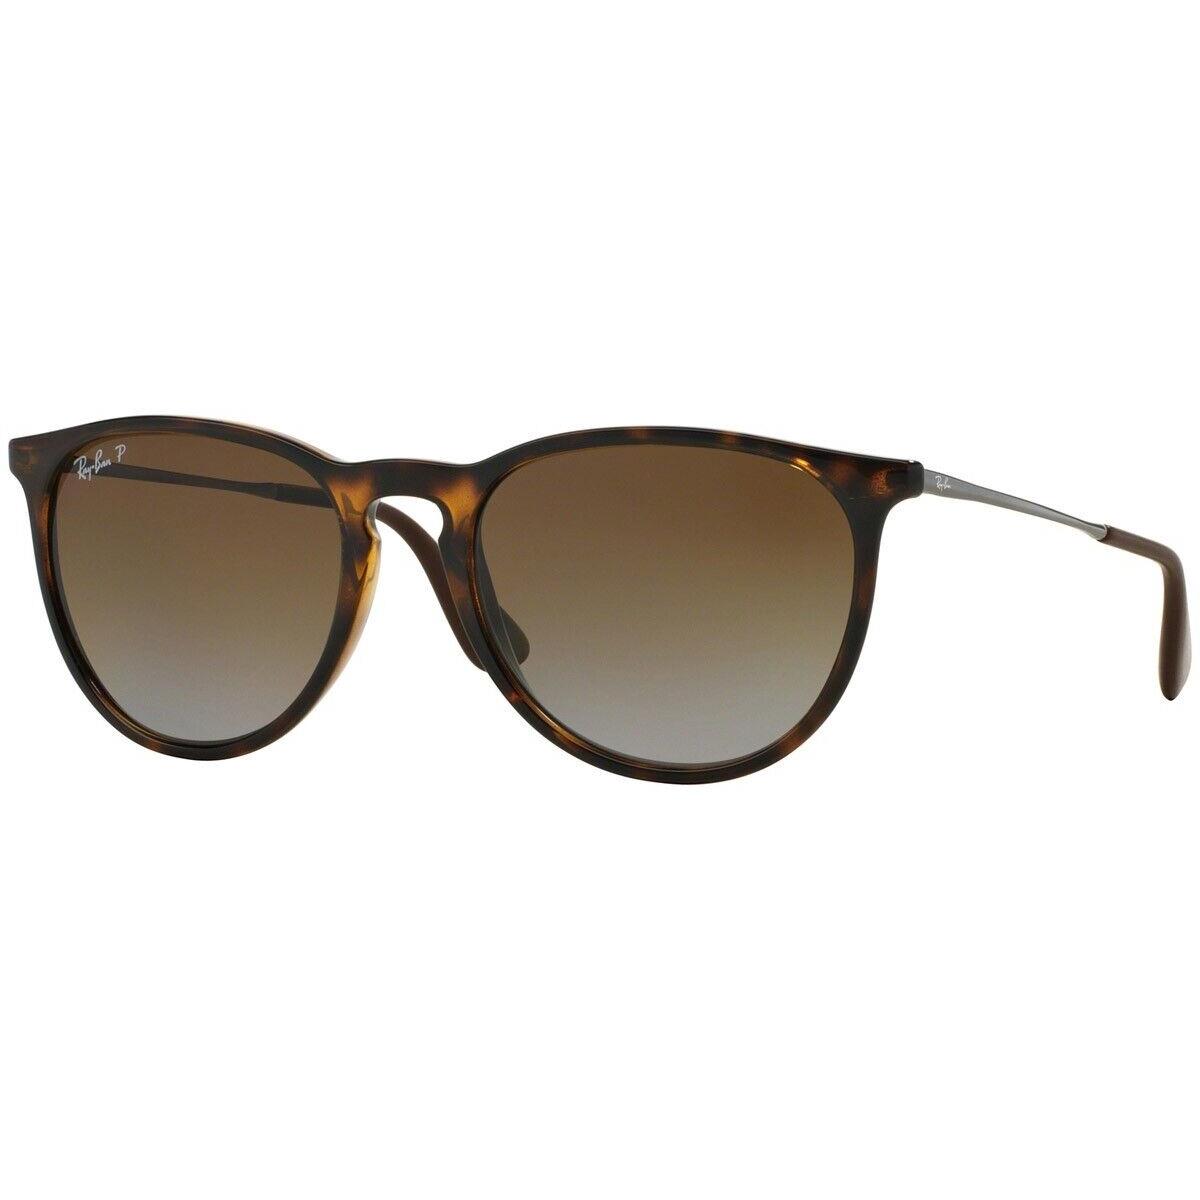 Ray-ban RB4171 710/T554 Erika Fashion Polarized Havana Brown Sunglasses - Frame: Havana, Lens: Polarized brown